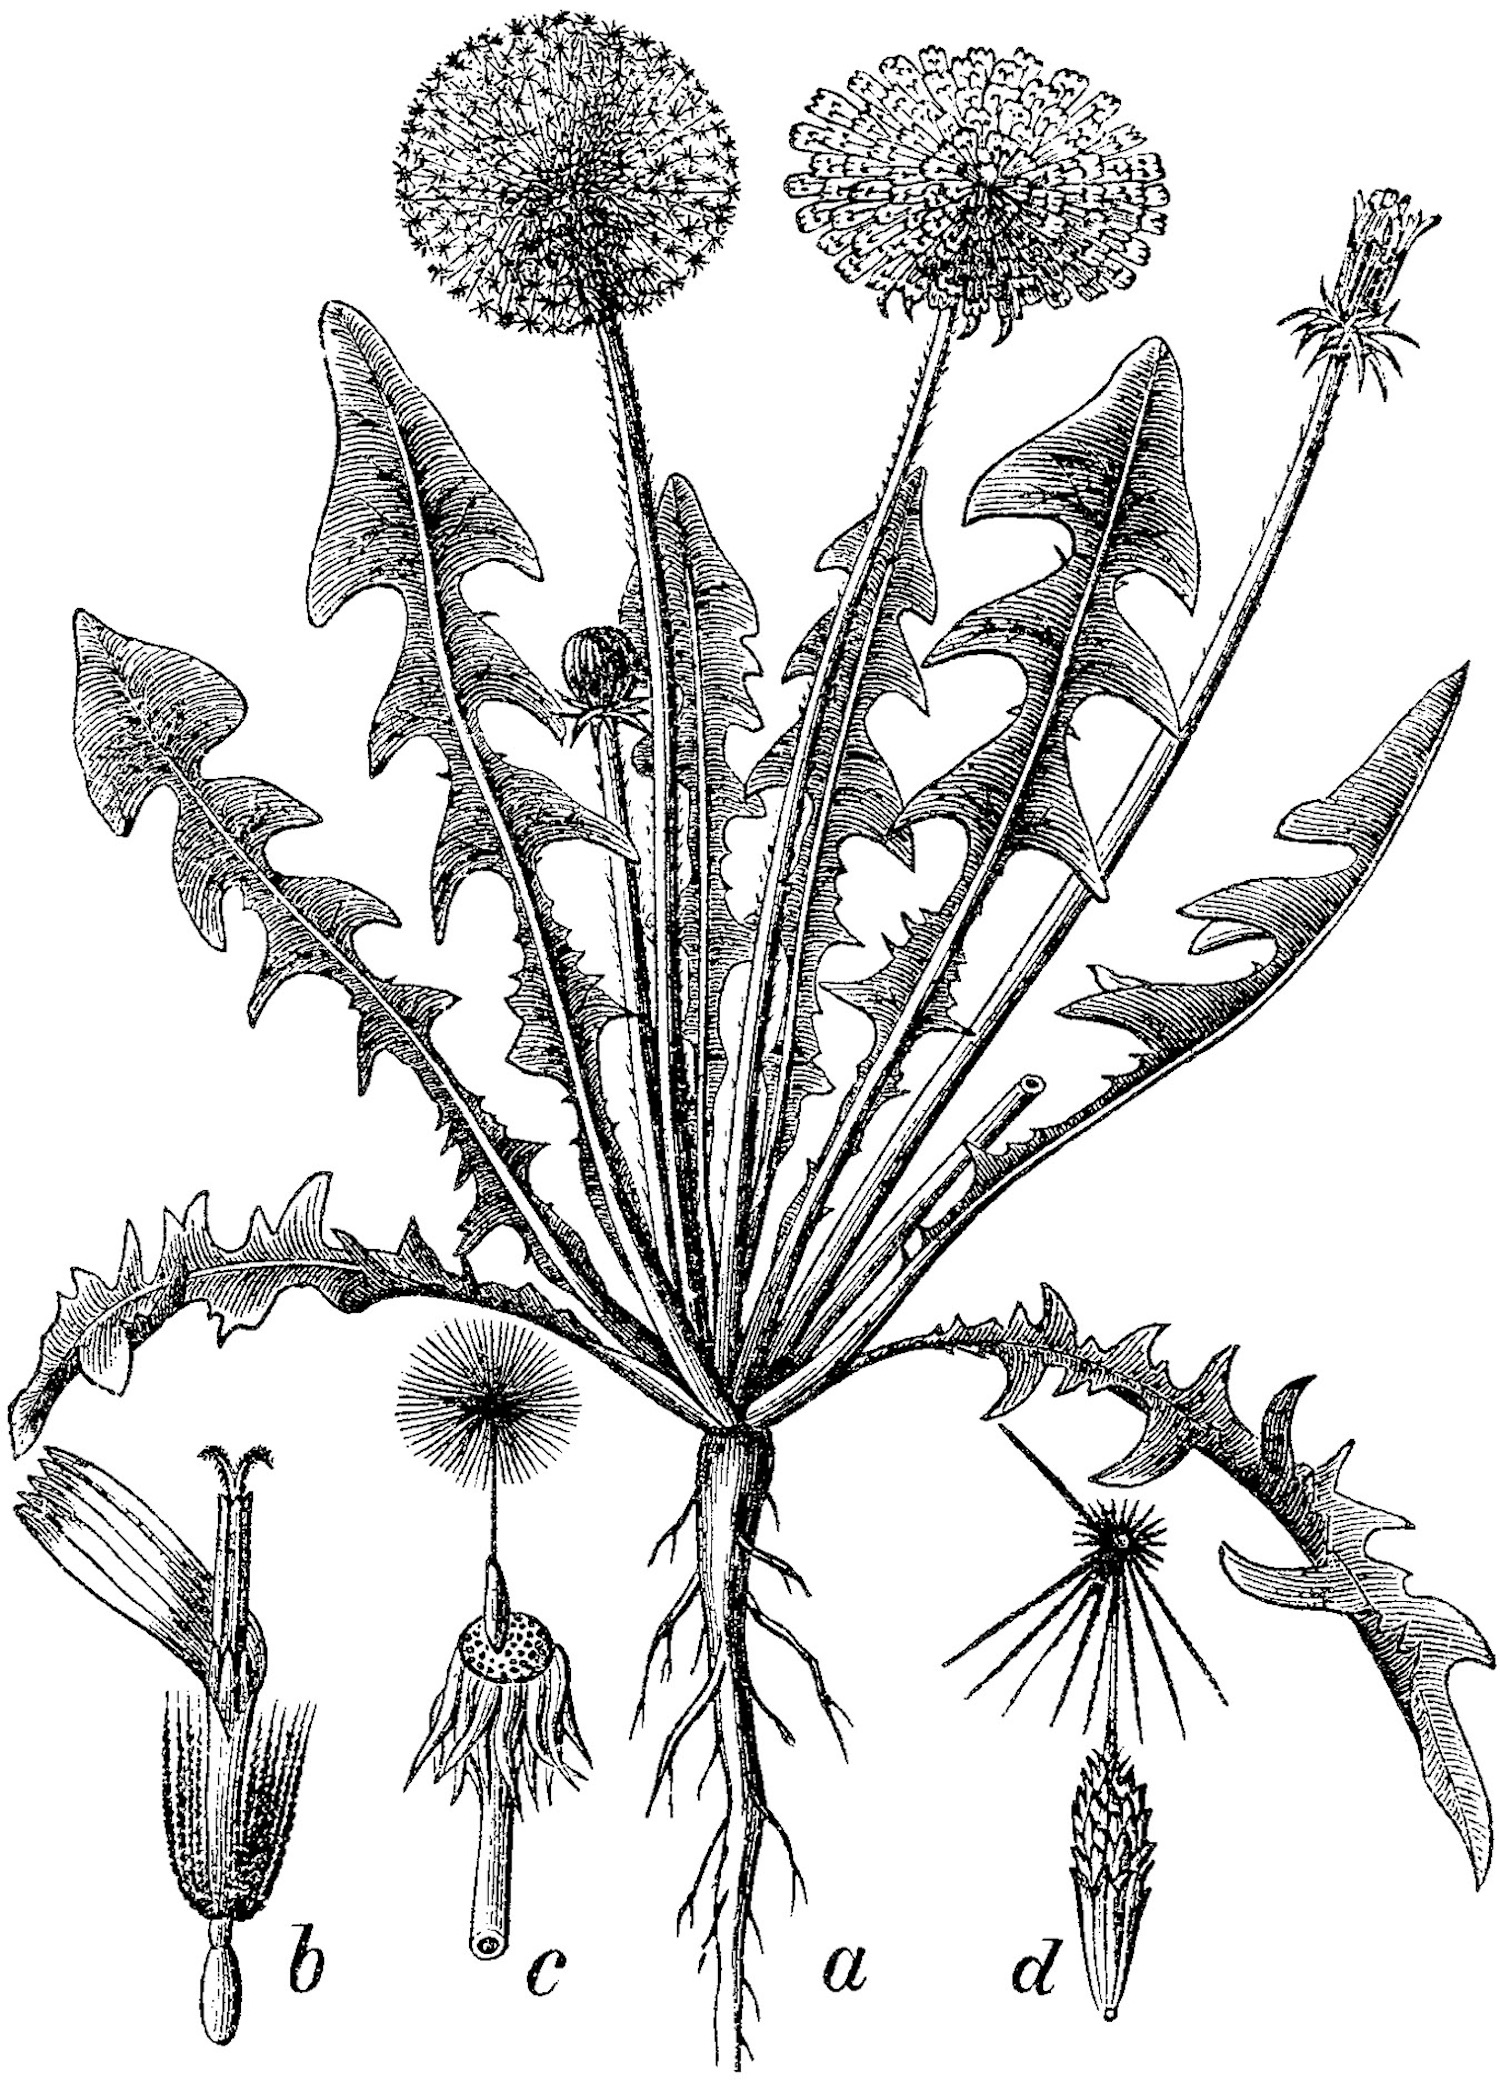 Dandelion illustration by Martin Cilenšek circa 1892.